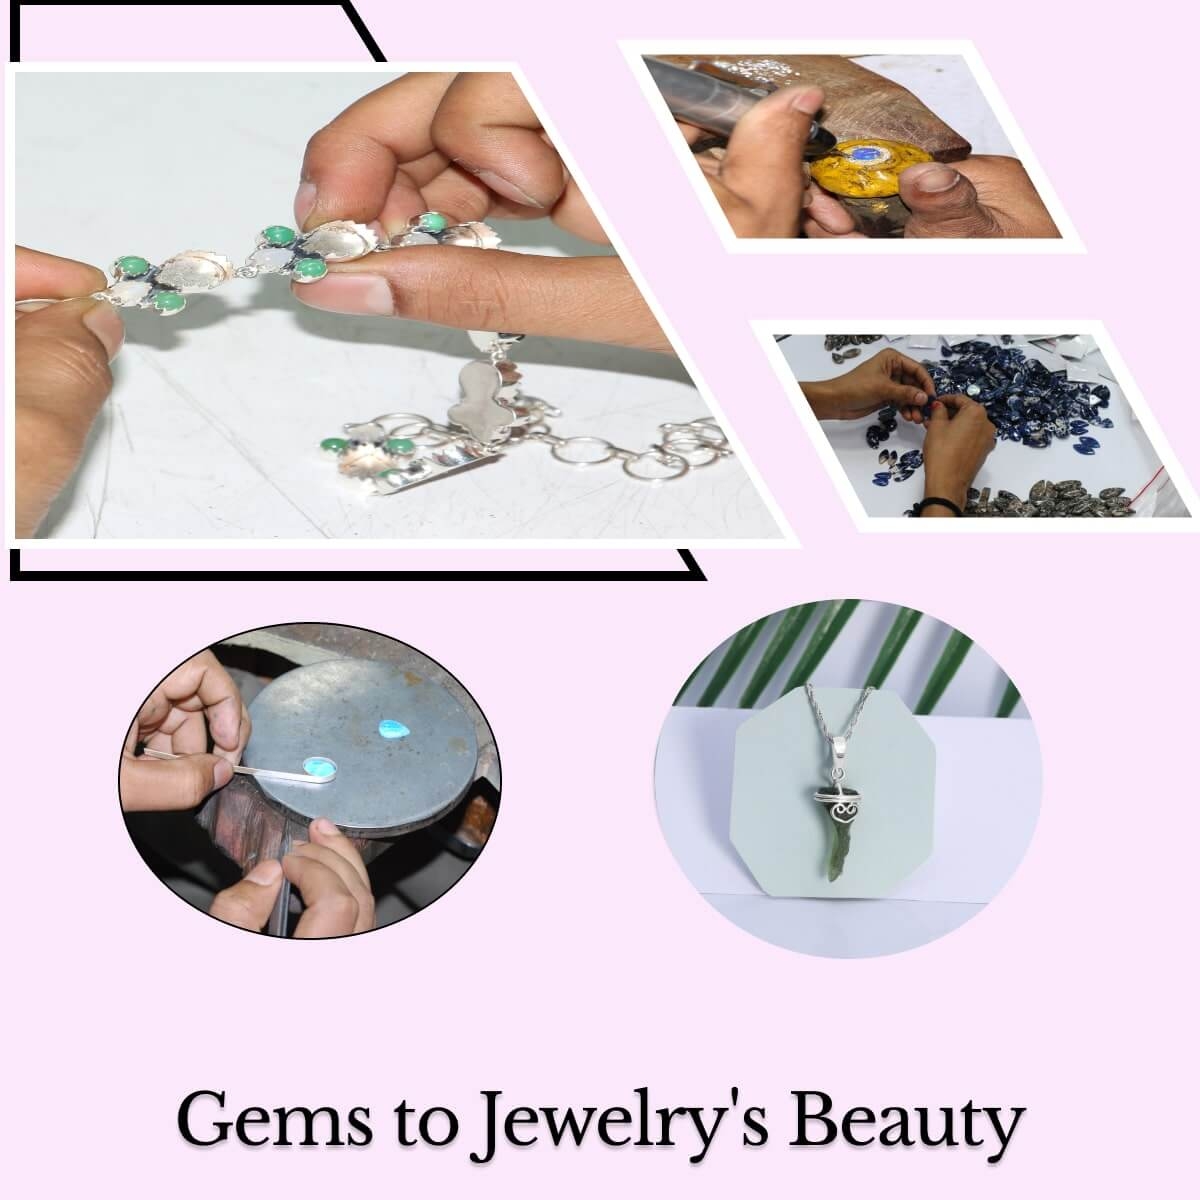 Gemstone Jewelry: From Mining to Polishing